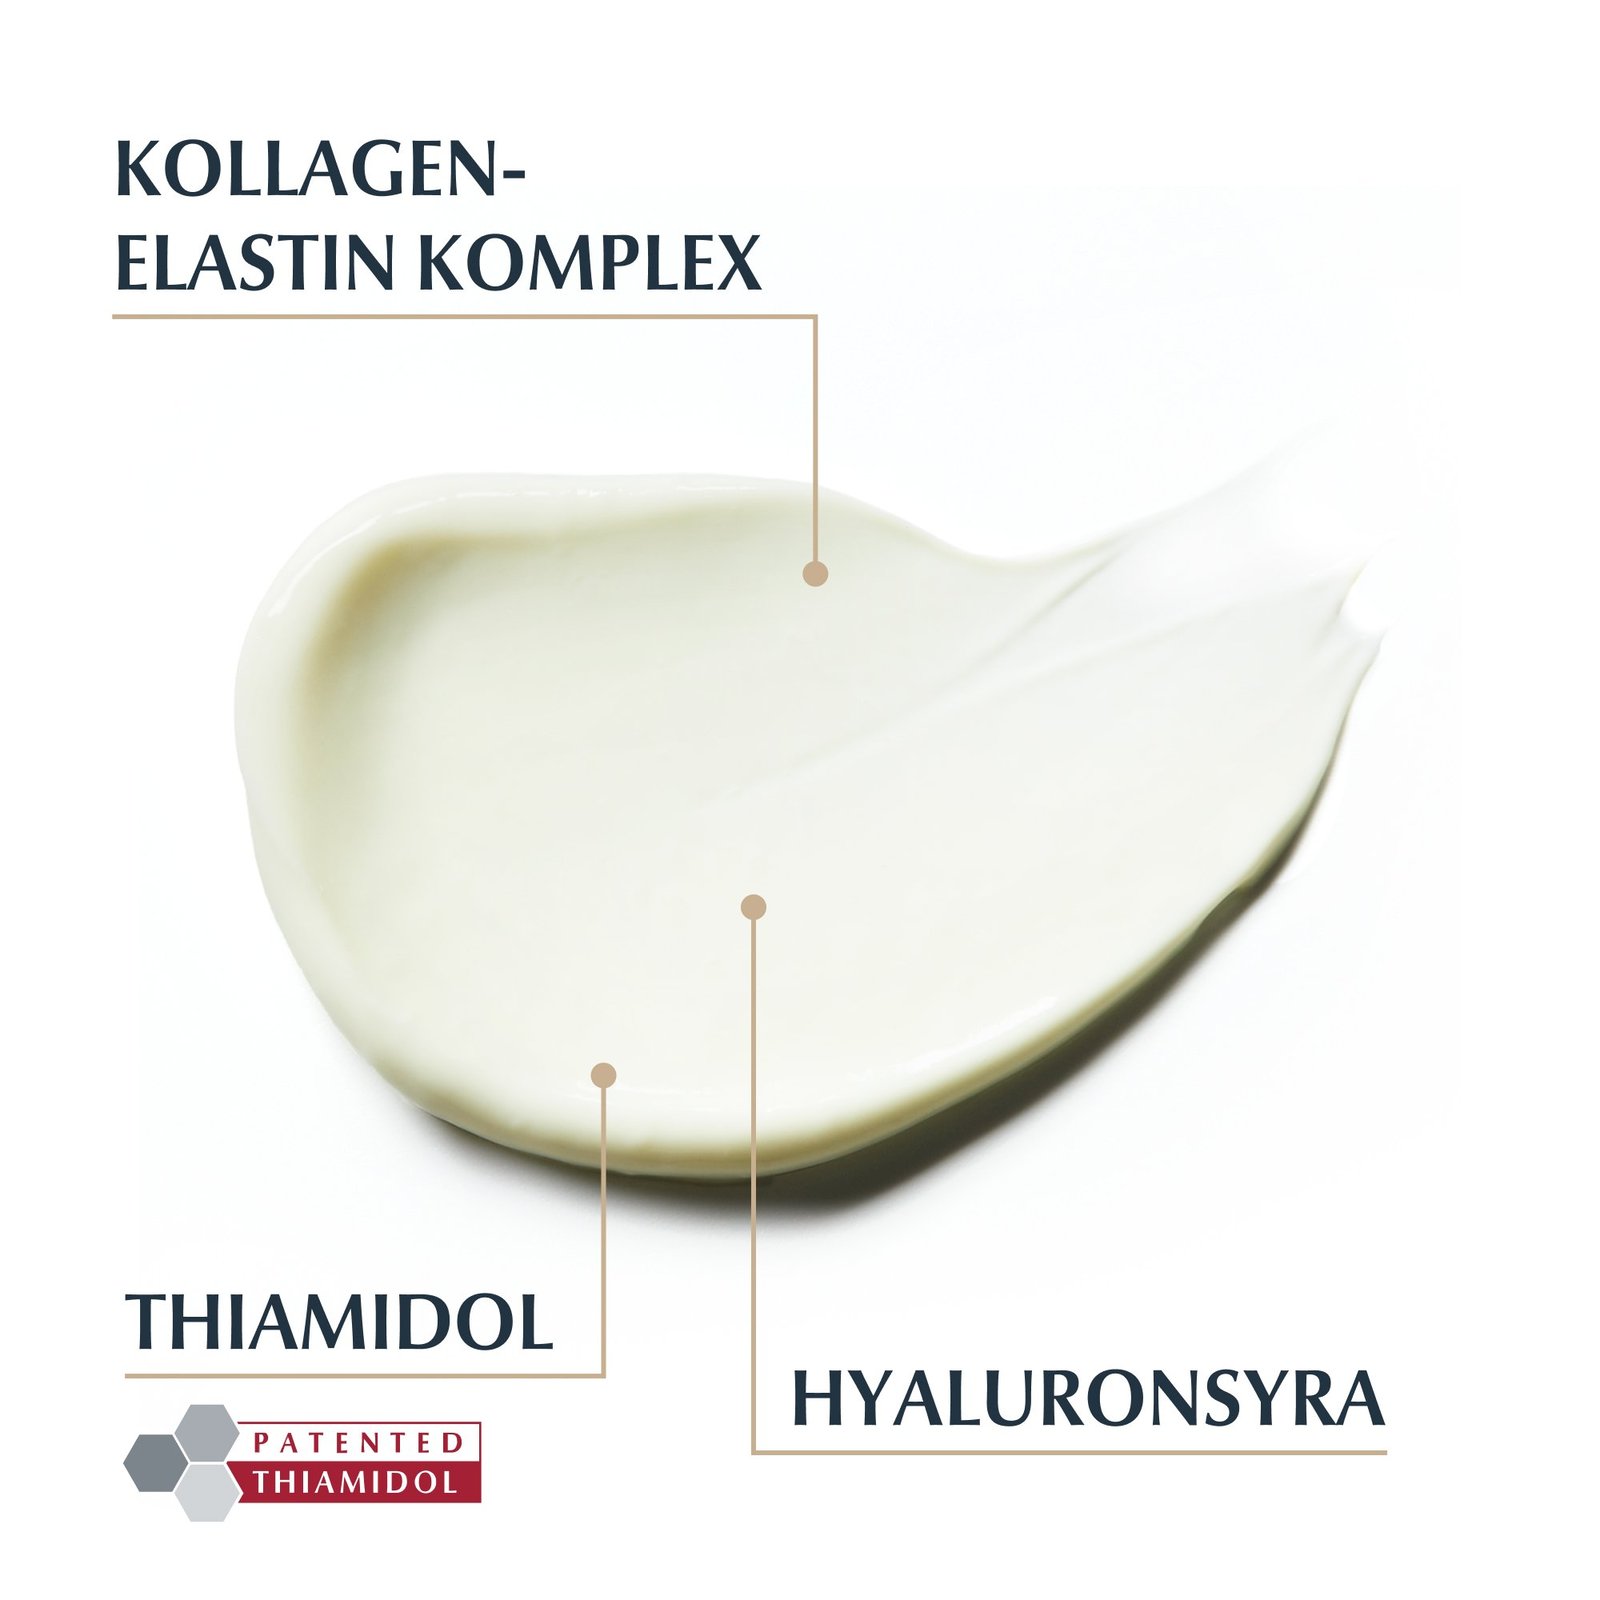 Eucerin Hyaluron-Filler + Elasticity SPF15 Day Cream 50 ml